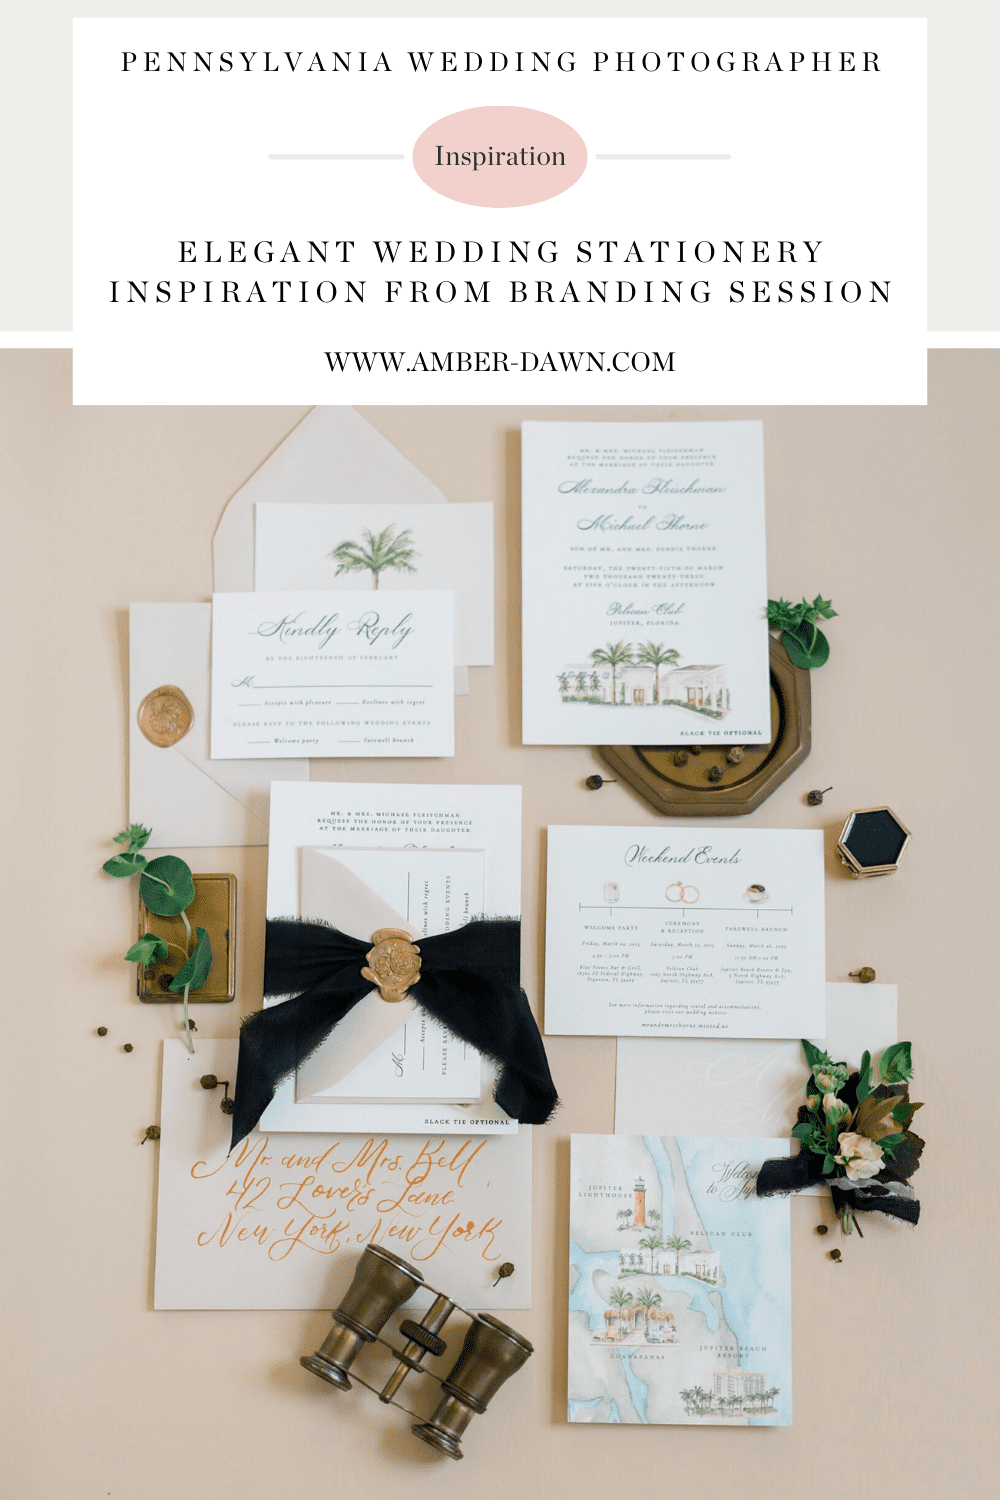 Wedding invitation suite photographed by Philadelphia Branding photographer Amber Dawn Photography